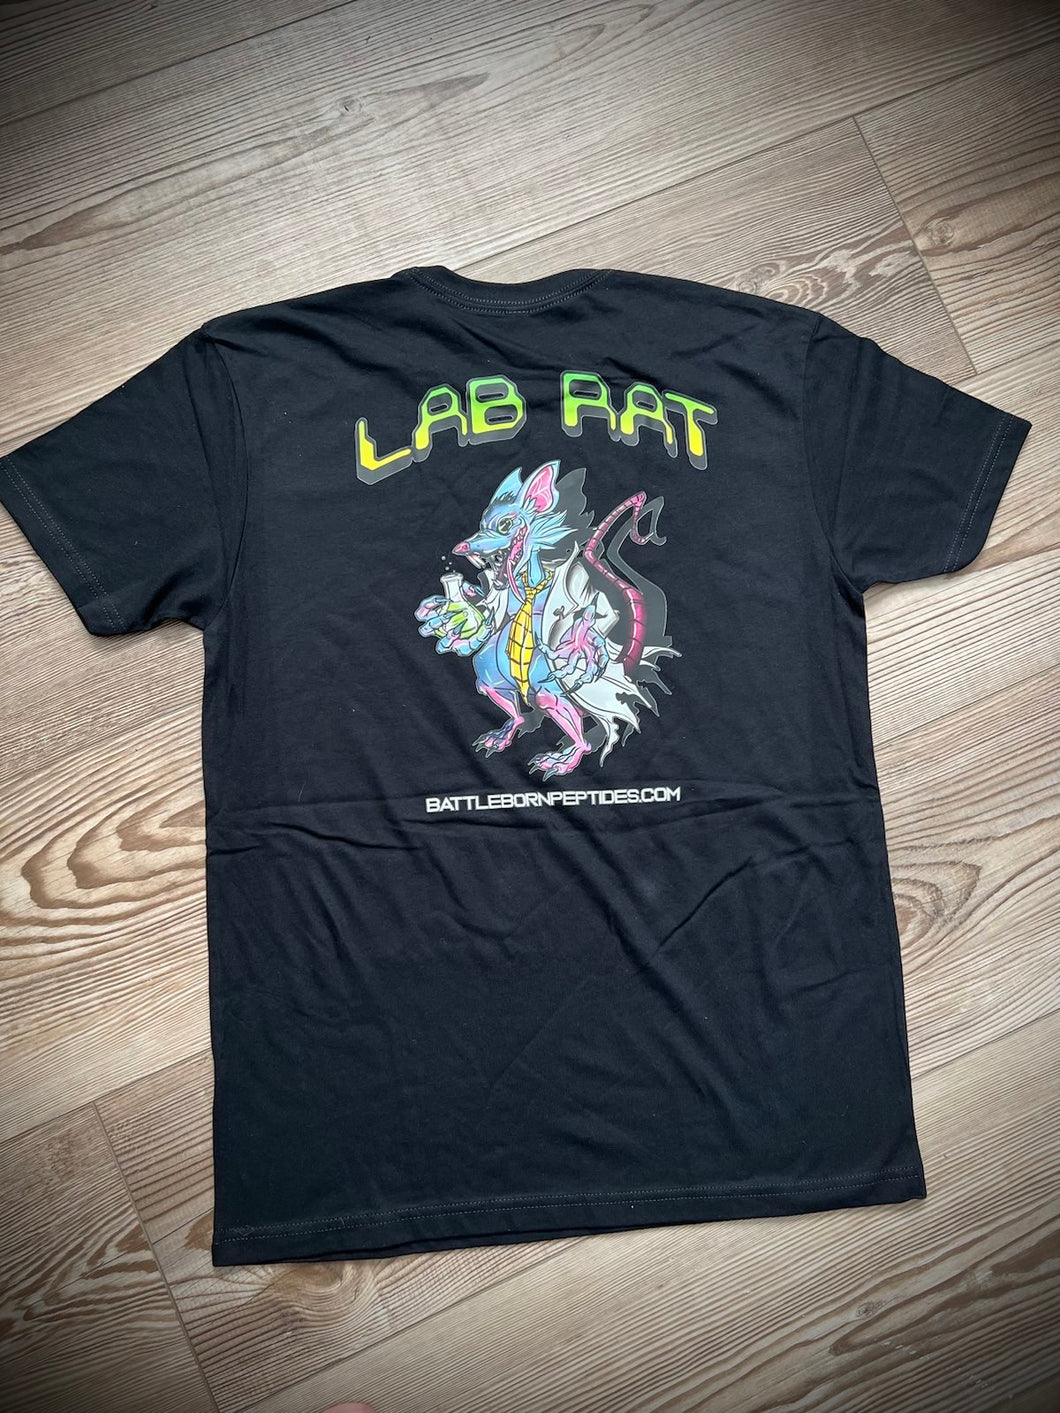 “Lab Rat” T-Shirt - Battle Born Peptides